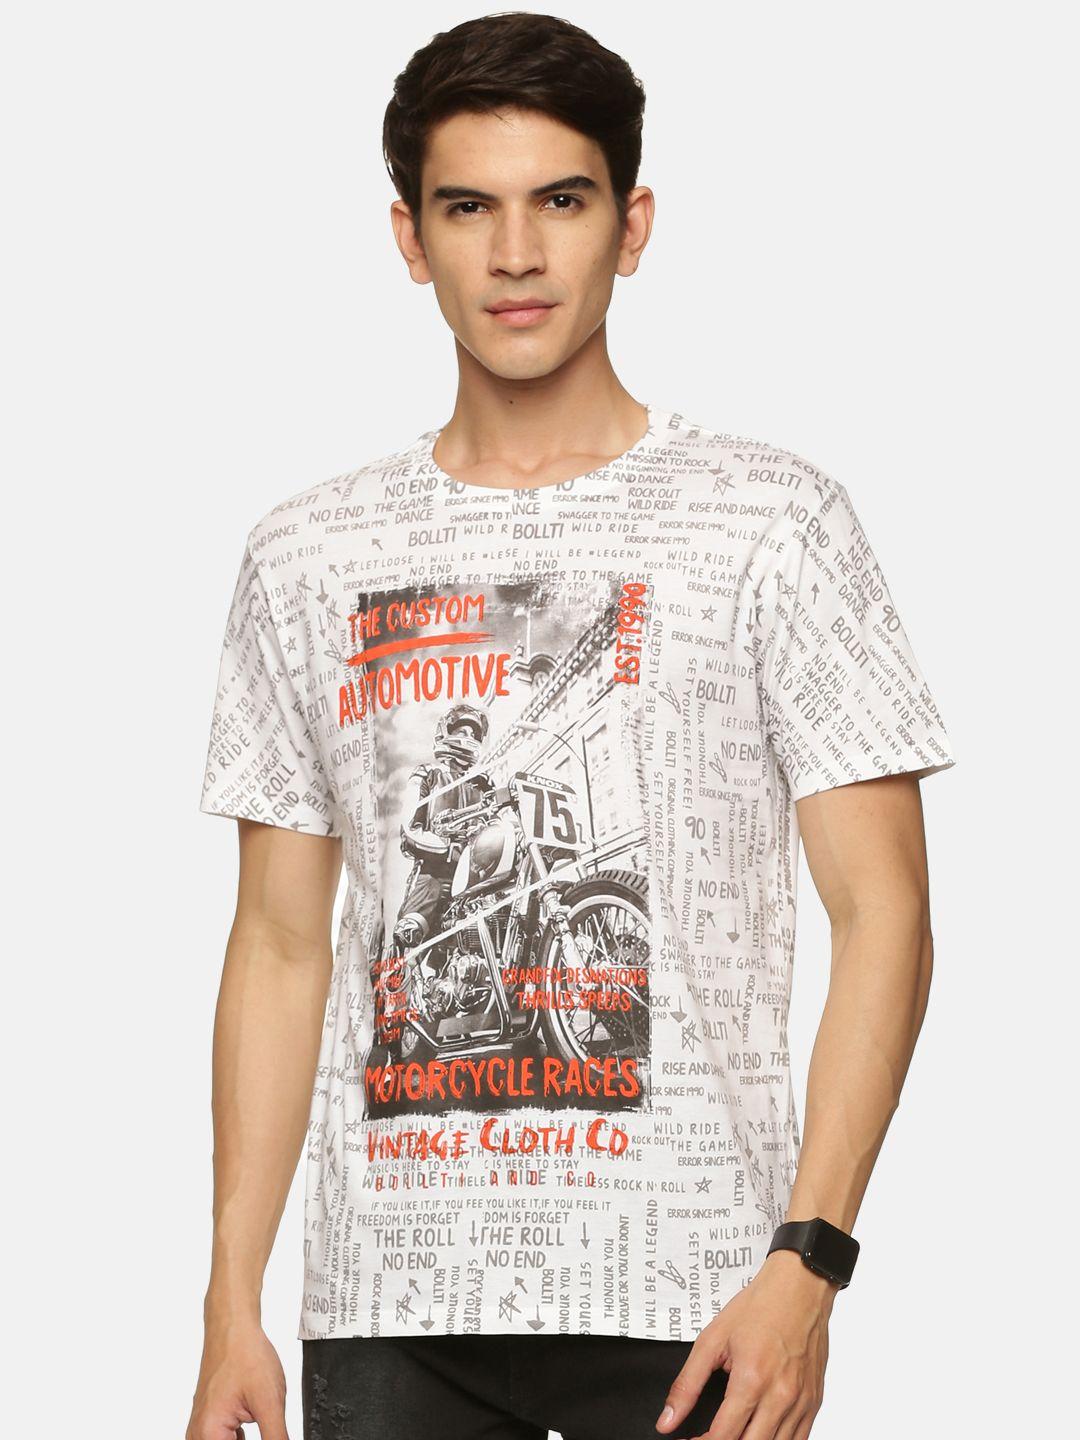 bollti graphic printed pure cotton casual t-shirt